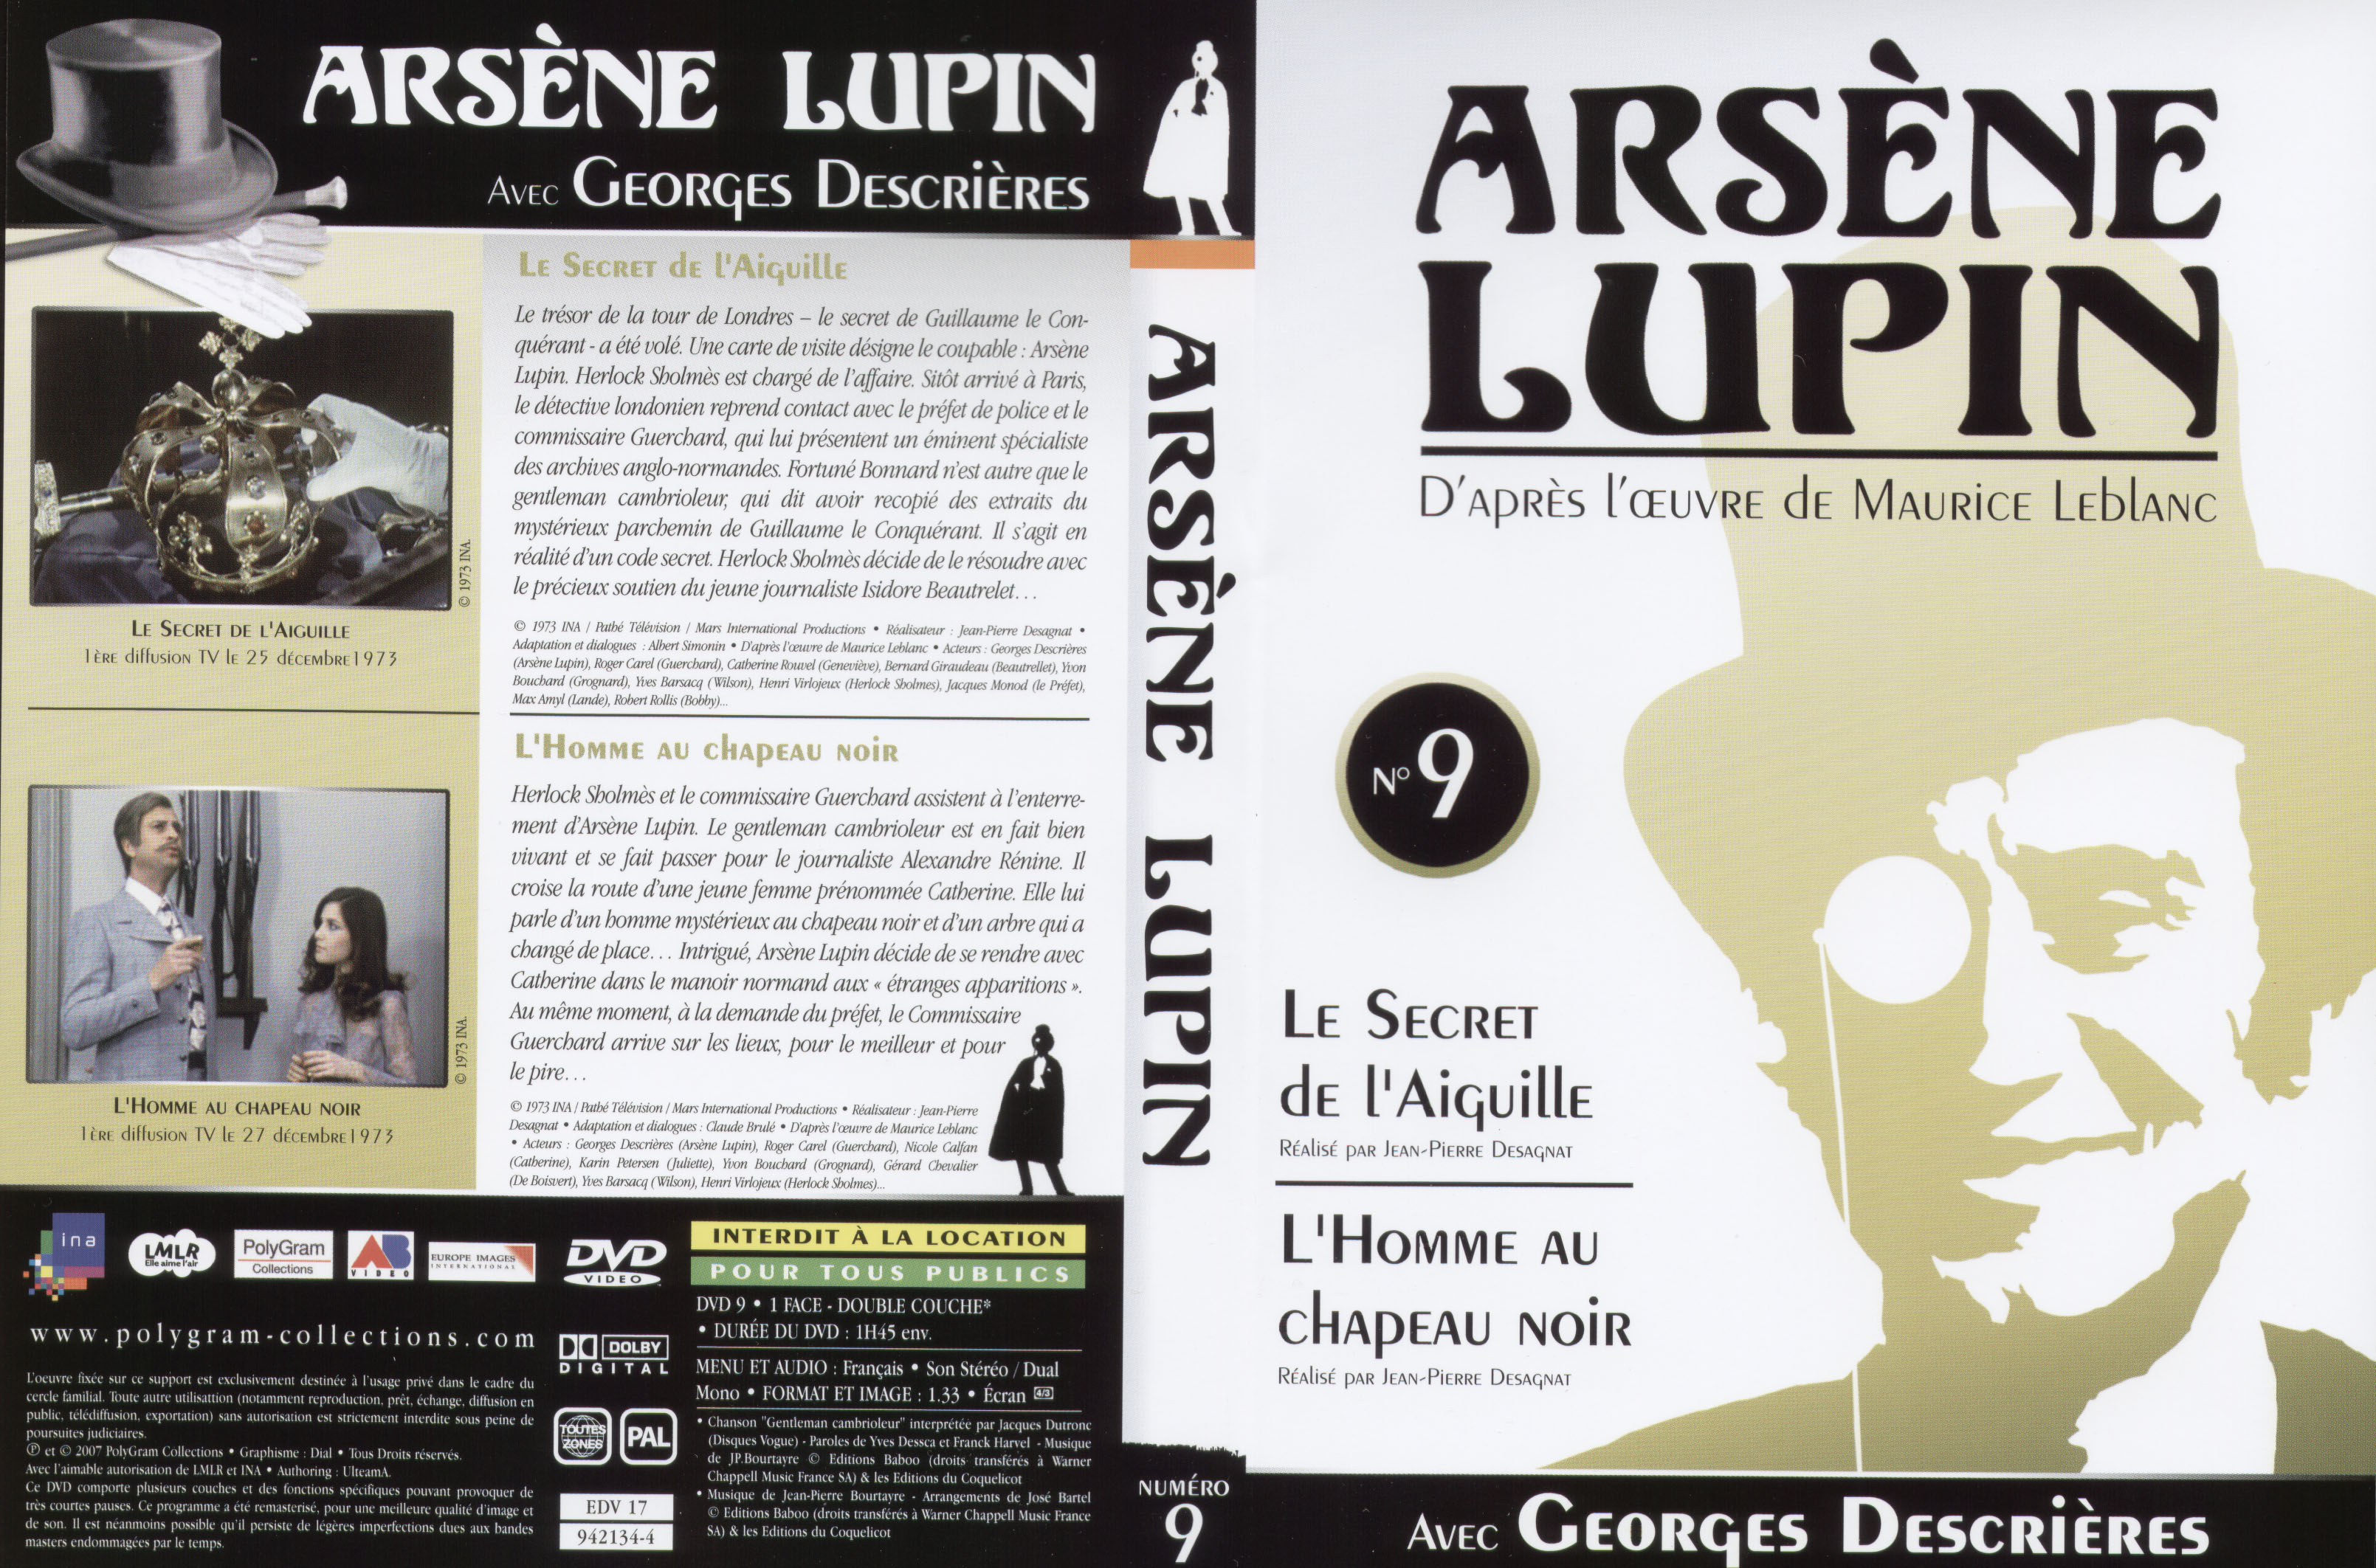 Jaquette Dvd De Arsene Lupin Dvd 09 Cinéma Passion